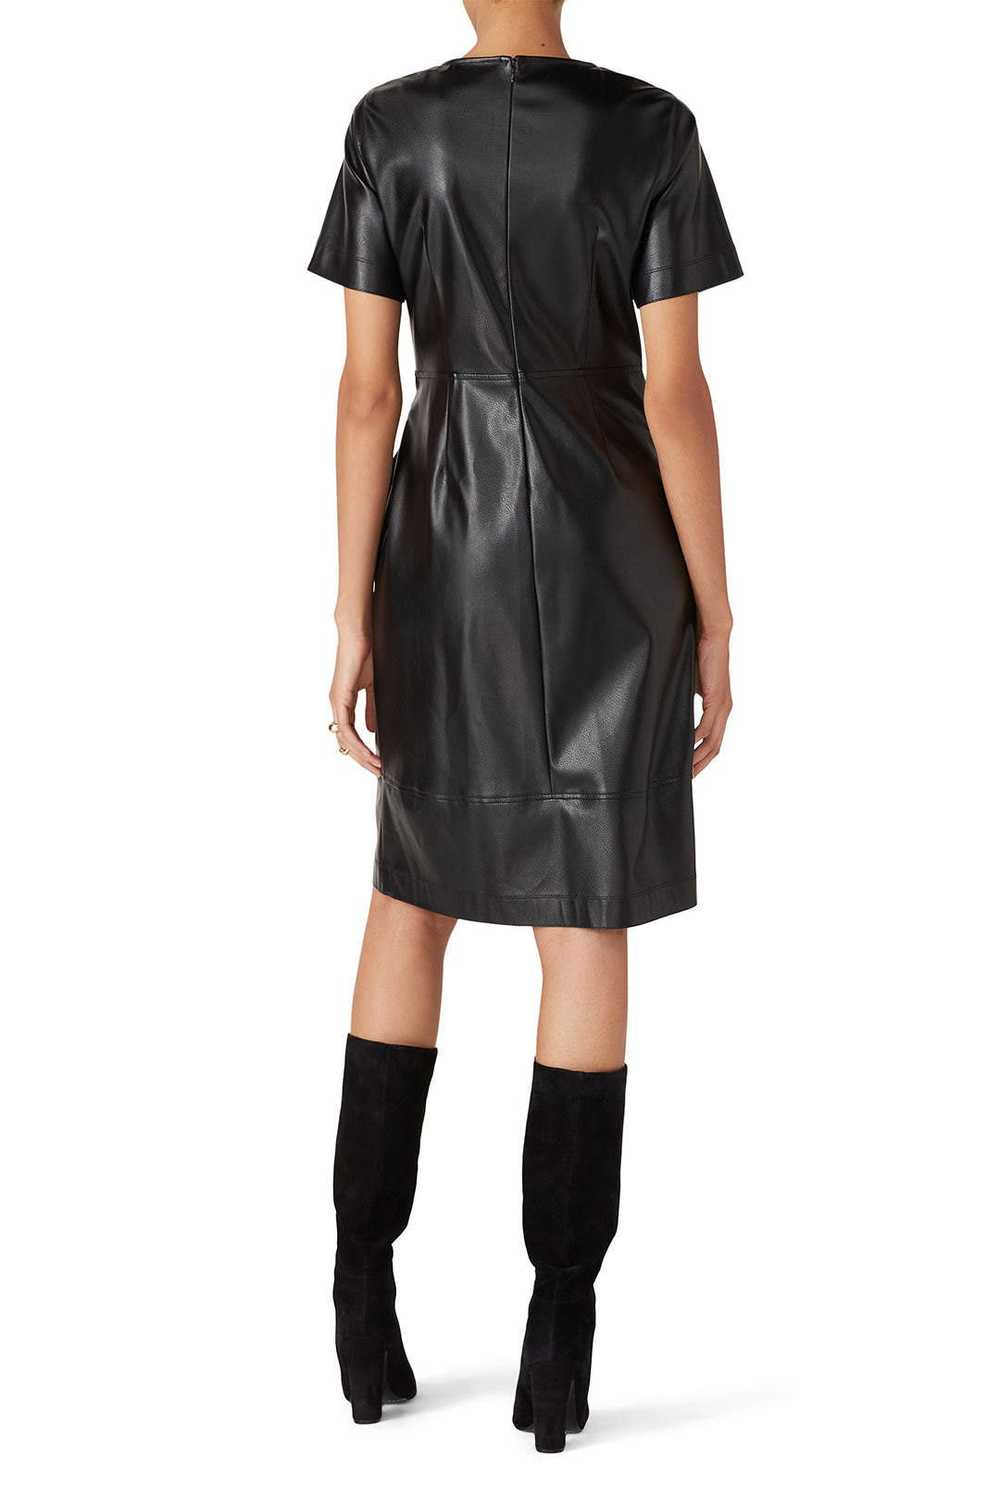 Natori Black Faux Leather Wrap Dress - image 3